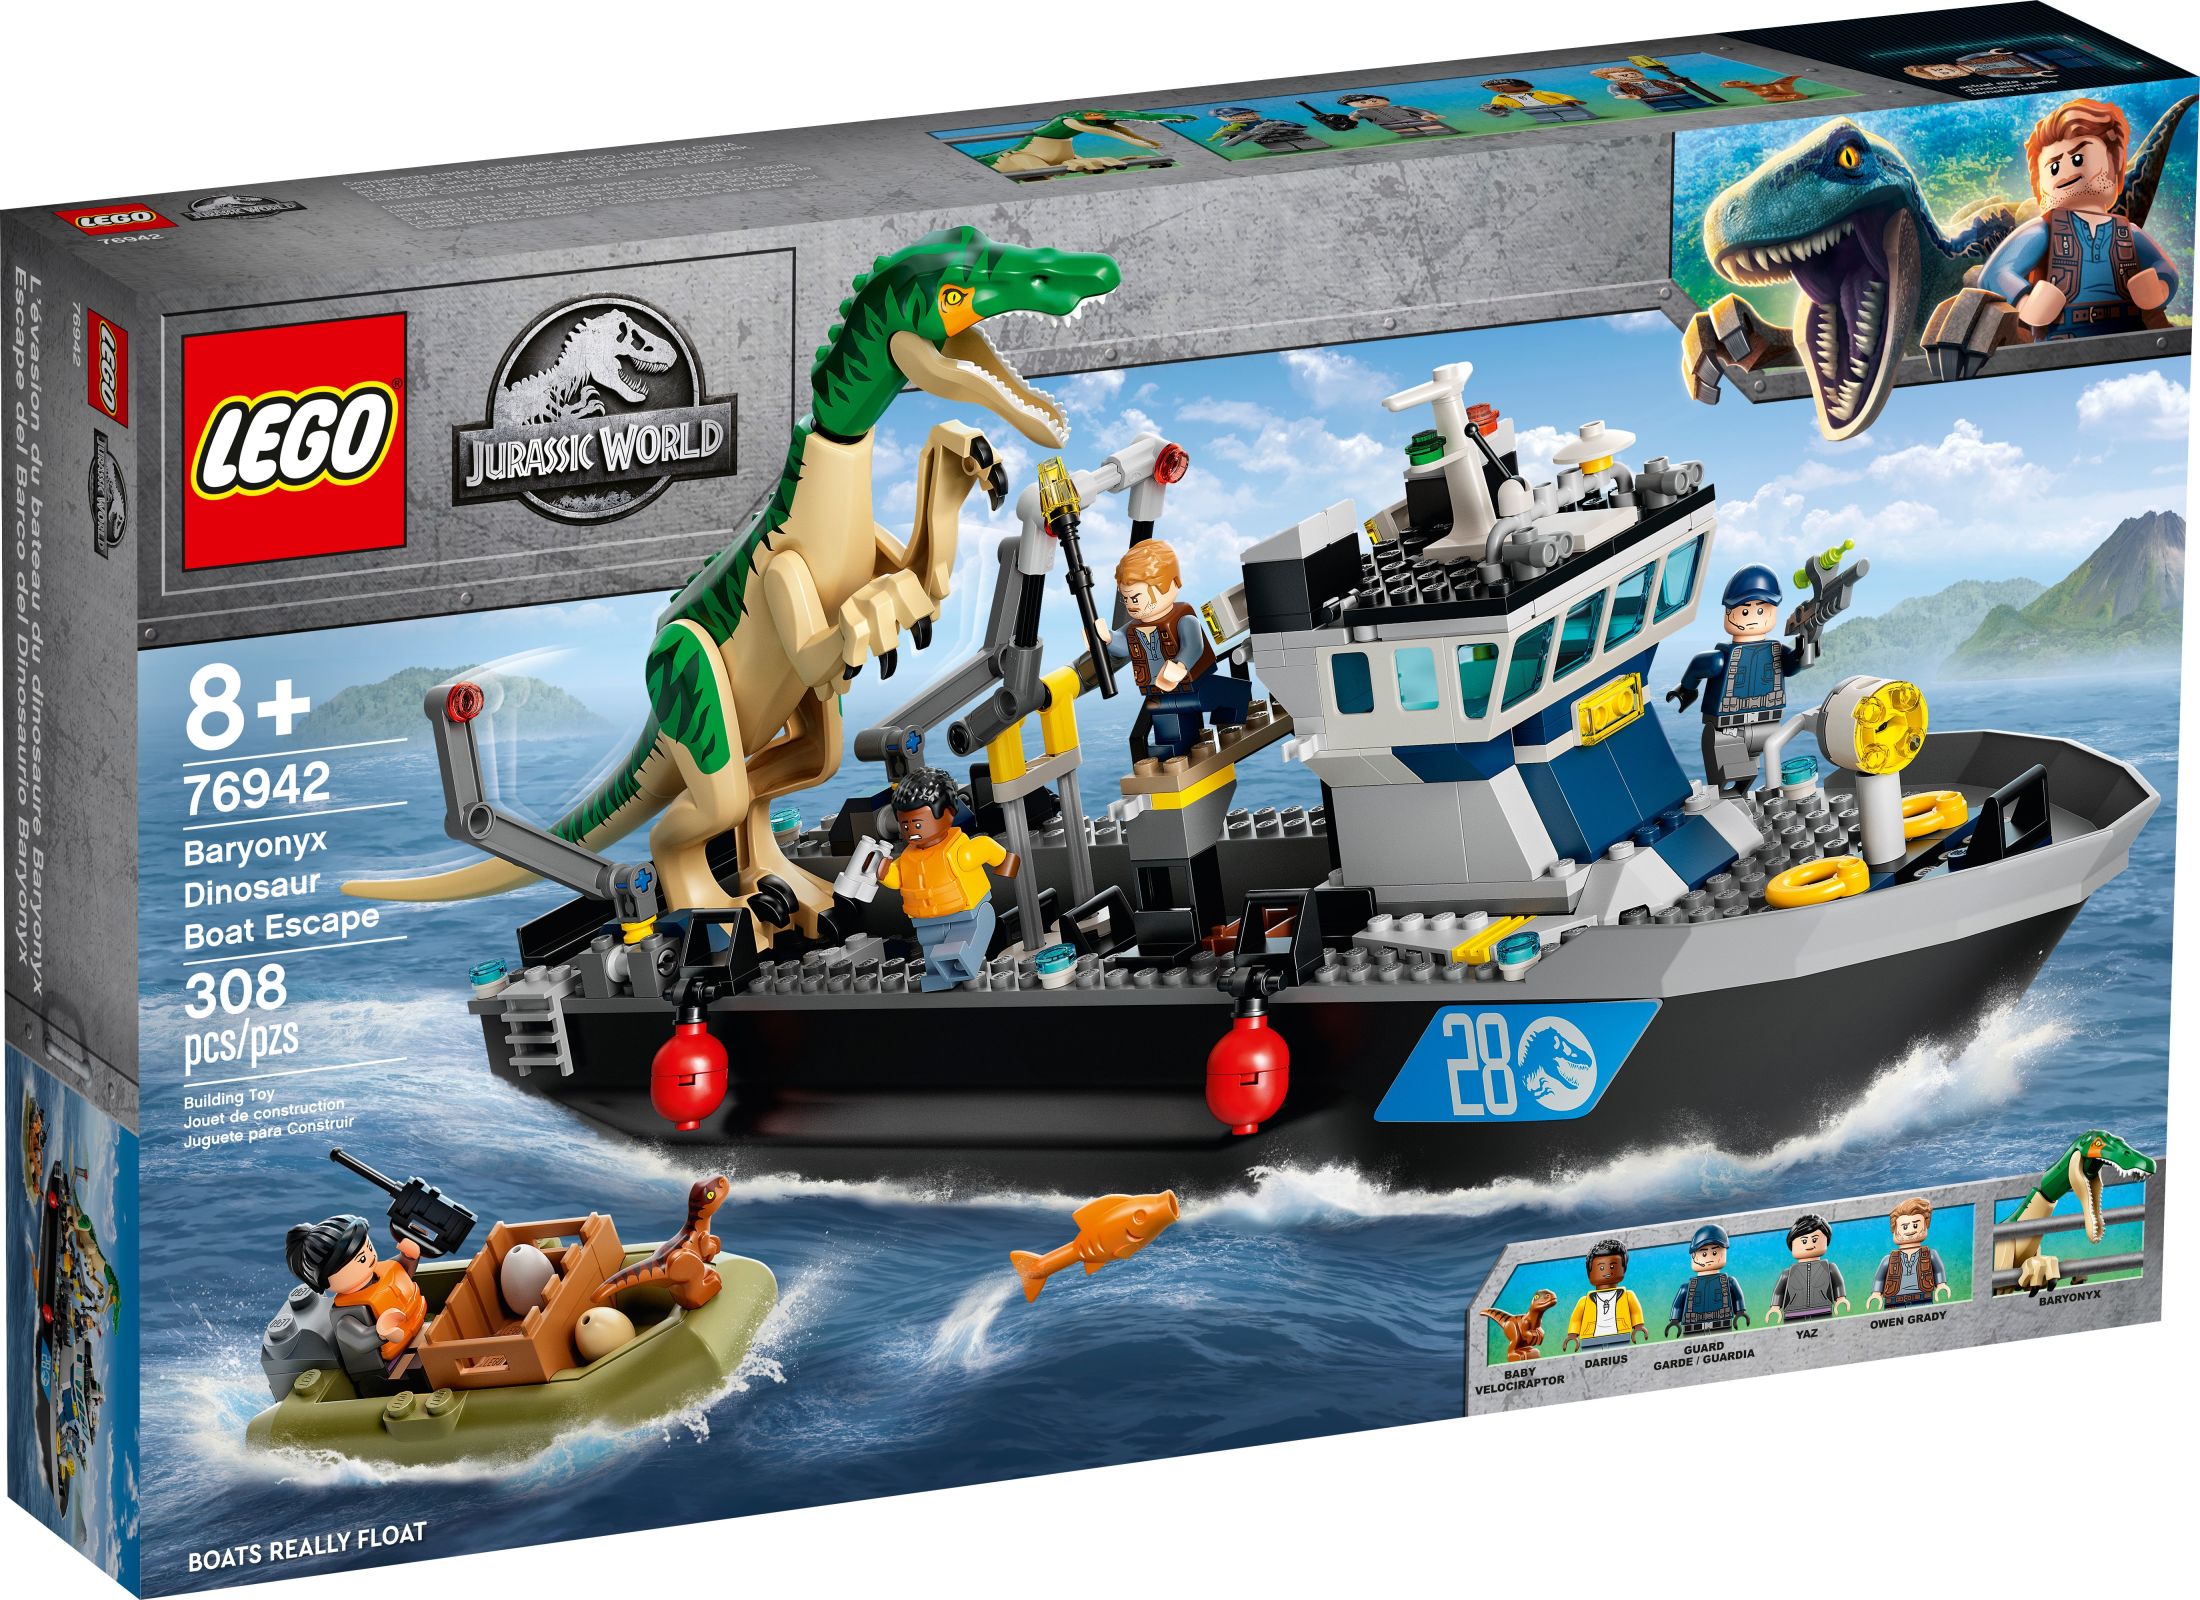 LEGO Jurassic World Baryonyx Dinosaur Boat Escape 76942 Building Toy Playset (308 Pieces) - image 3 of 8